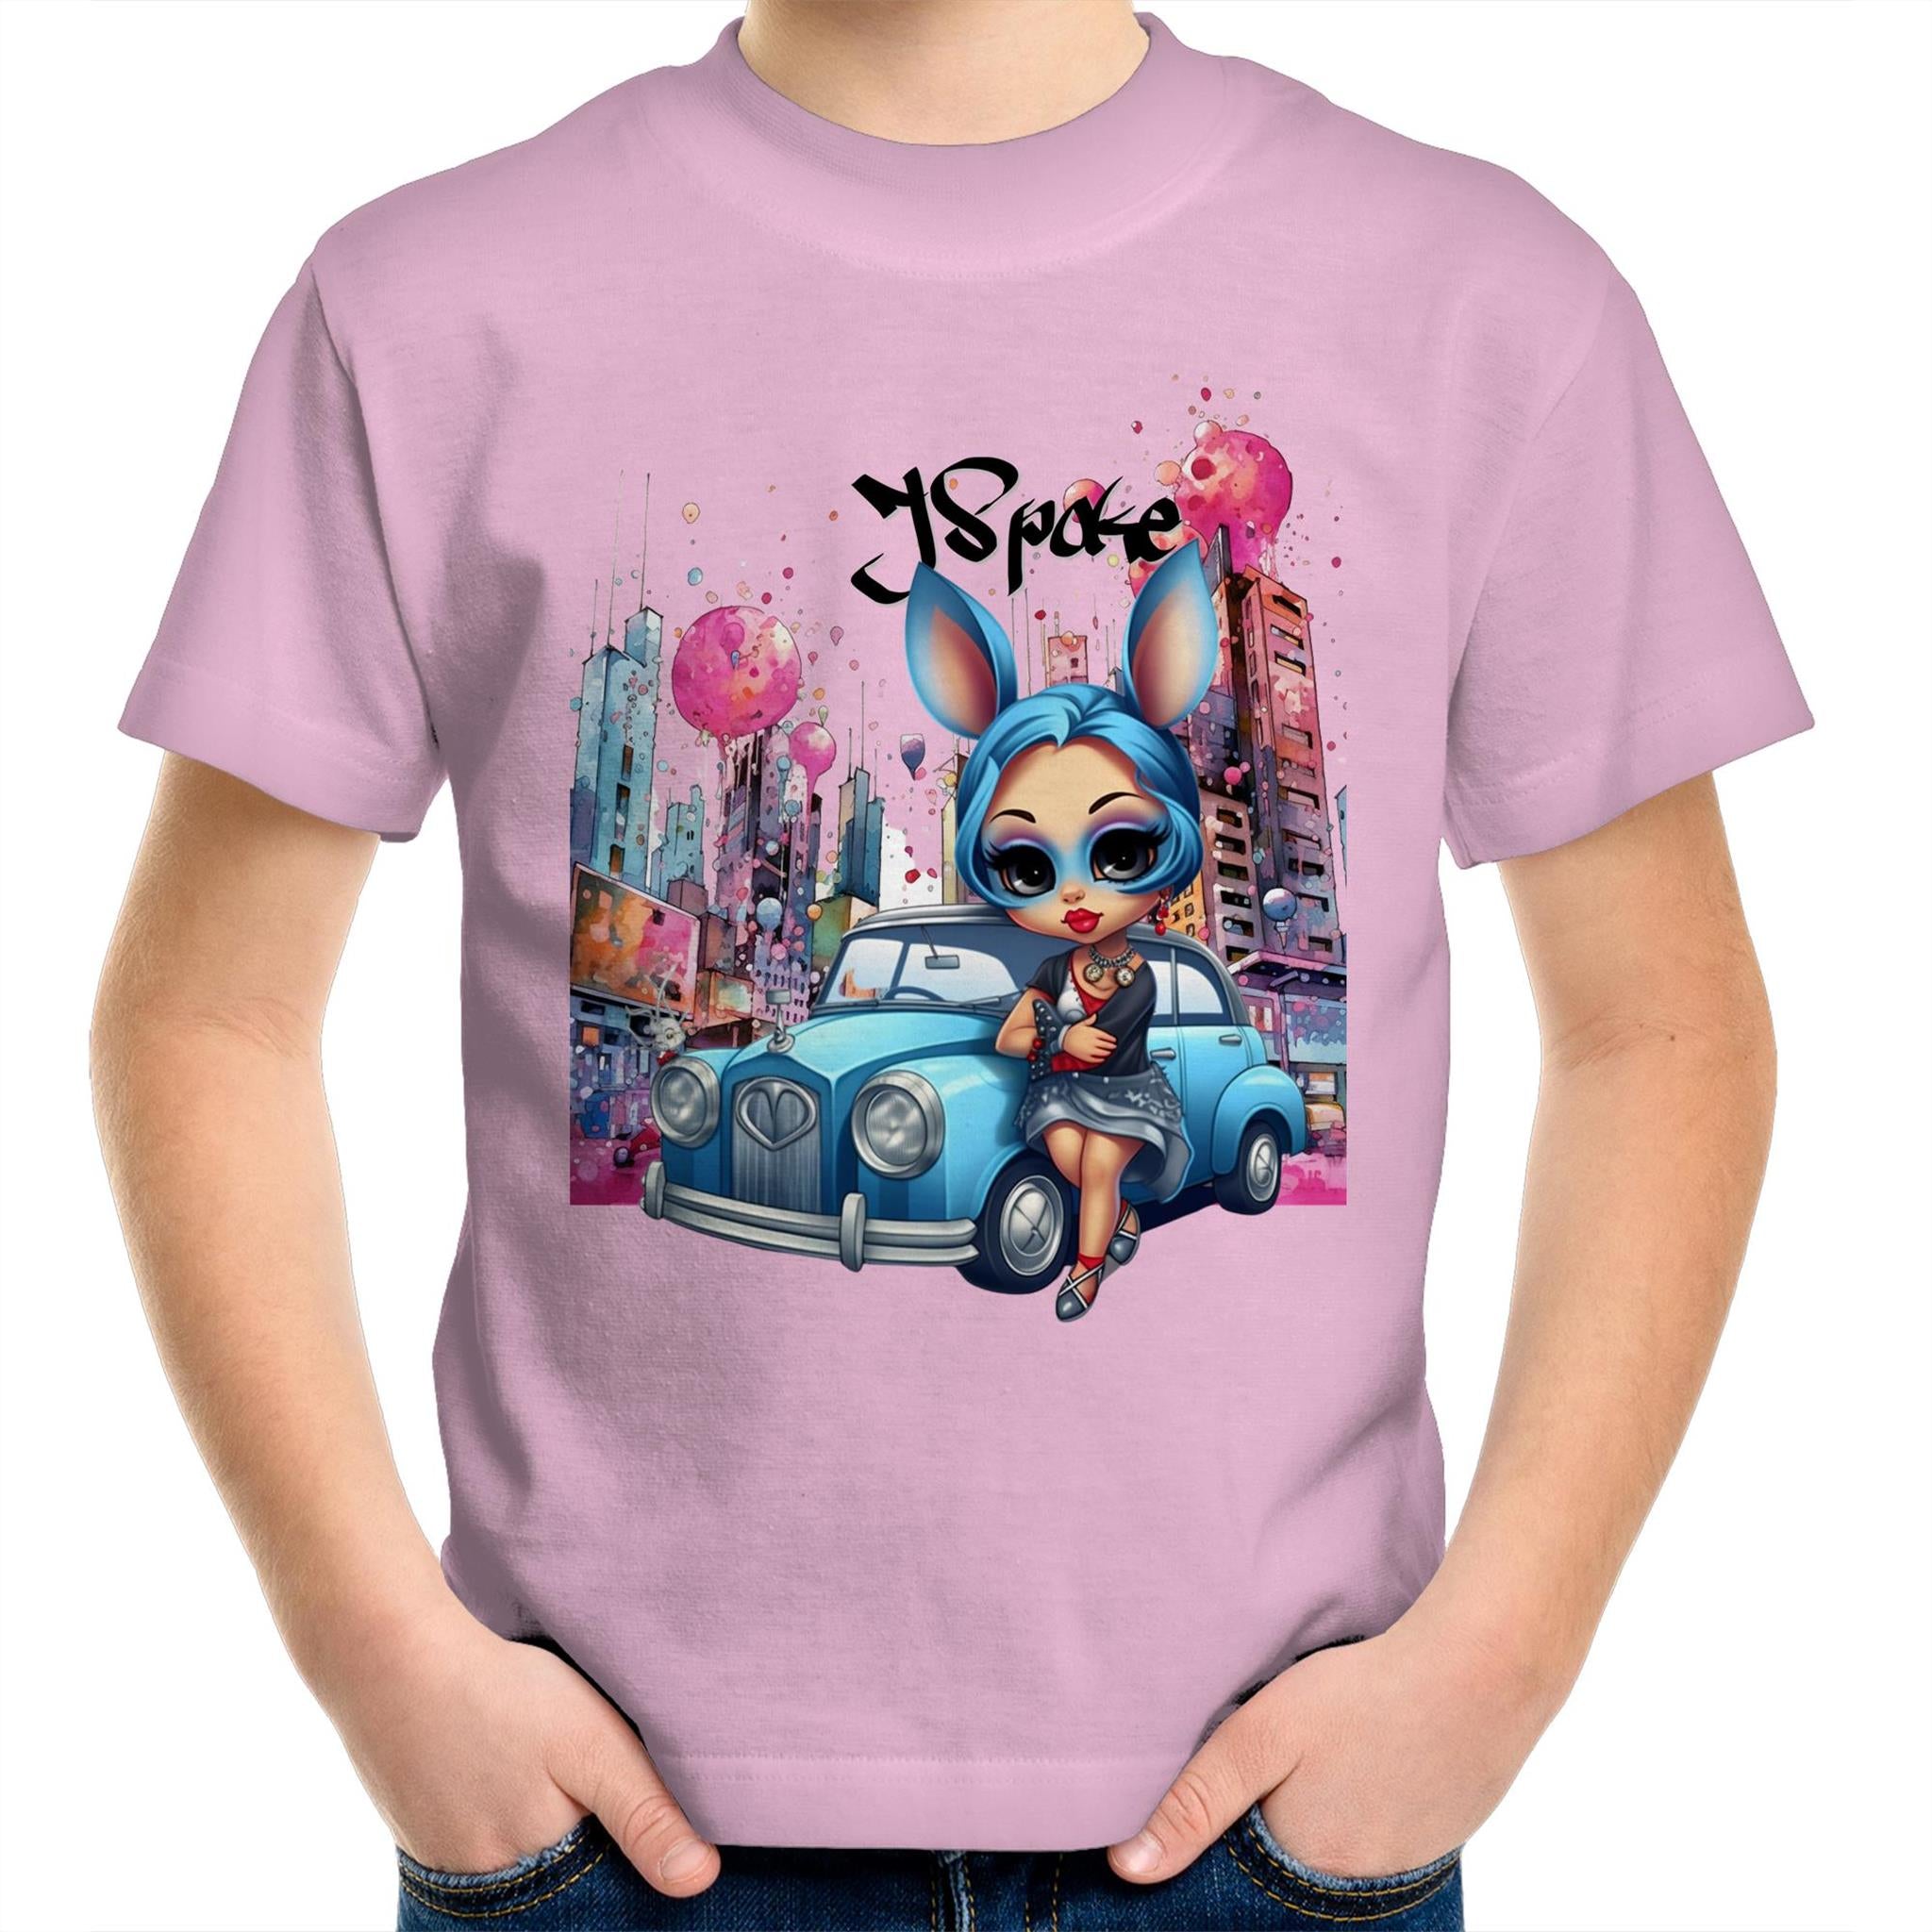 BUNNY CHIC - Kids Youth T-Shirt - JSPOKE